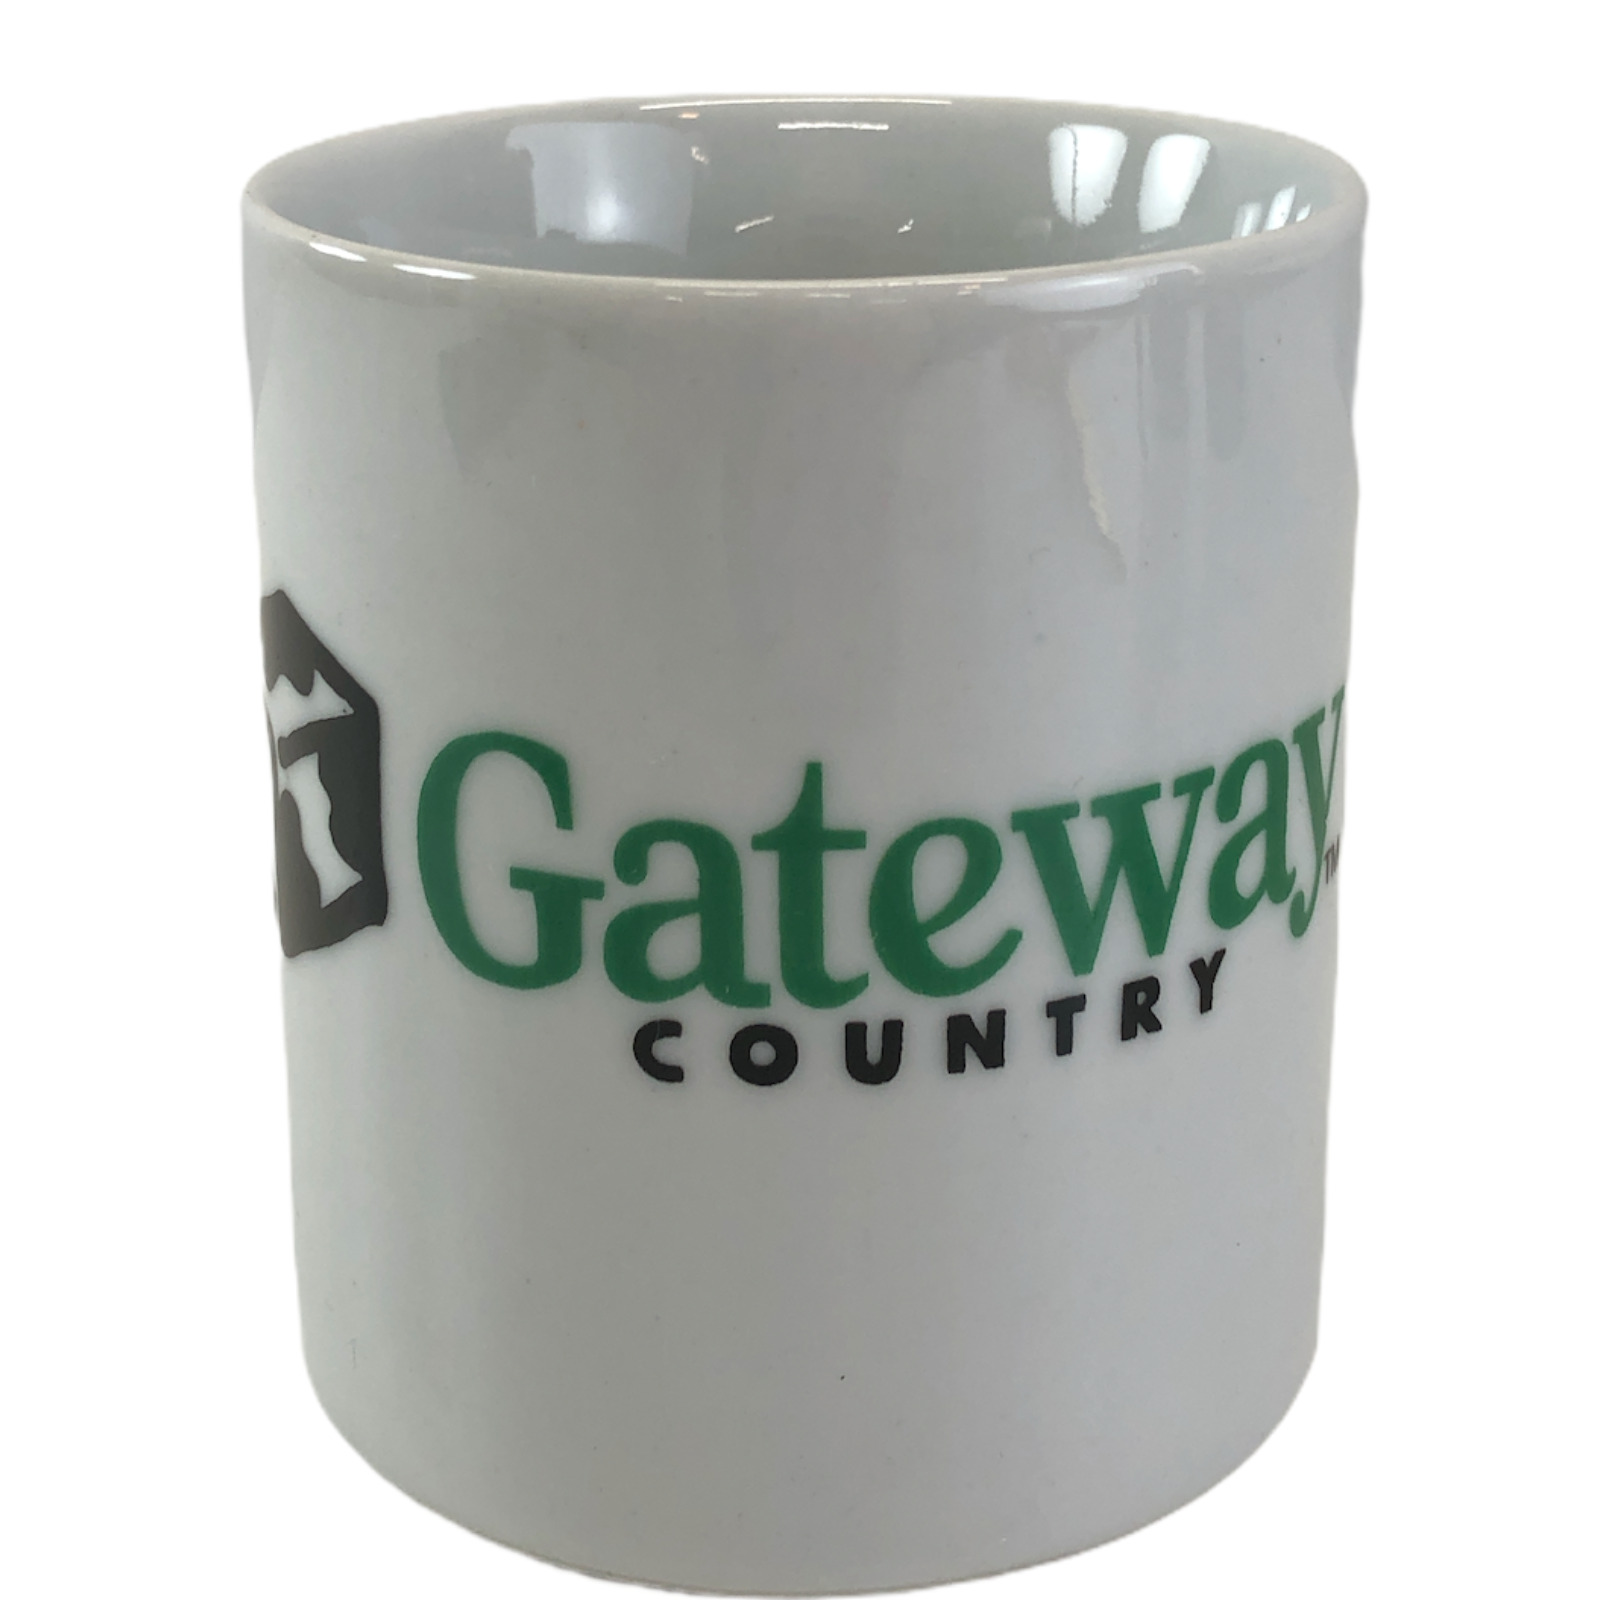 Gateway Country Mug Vtg White & Black Coffee Tea Computer Cup